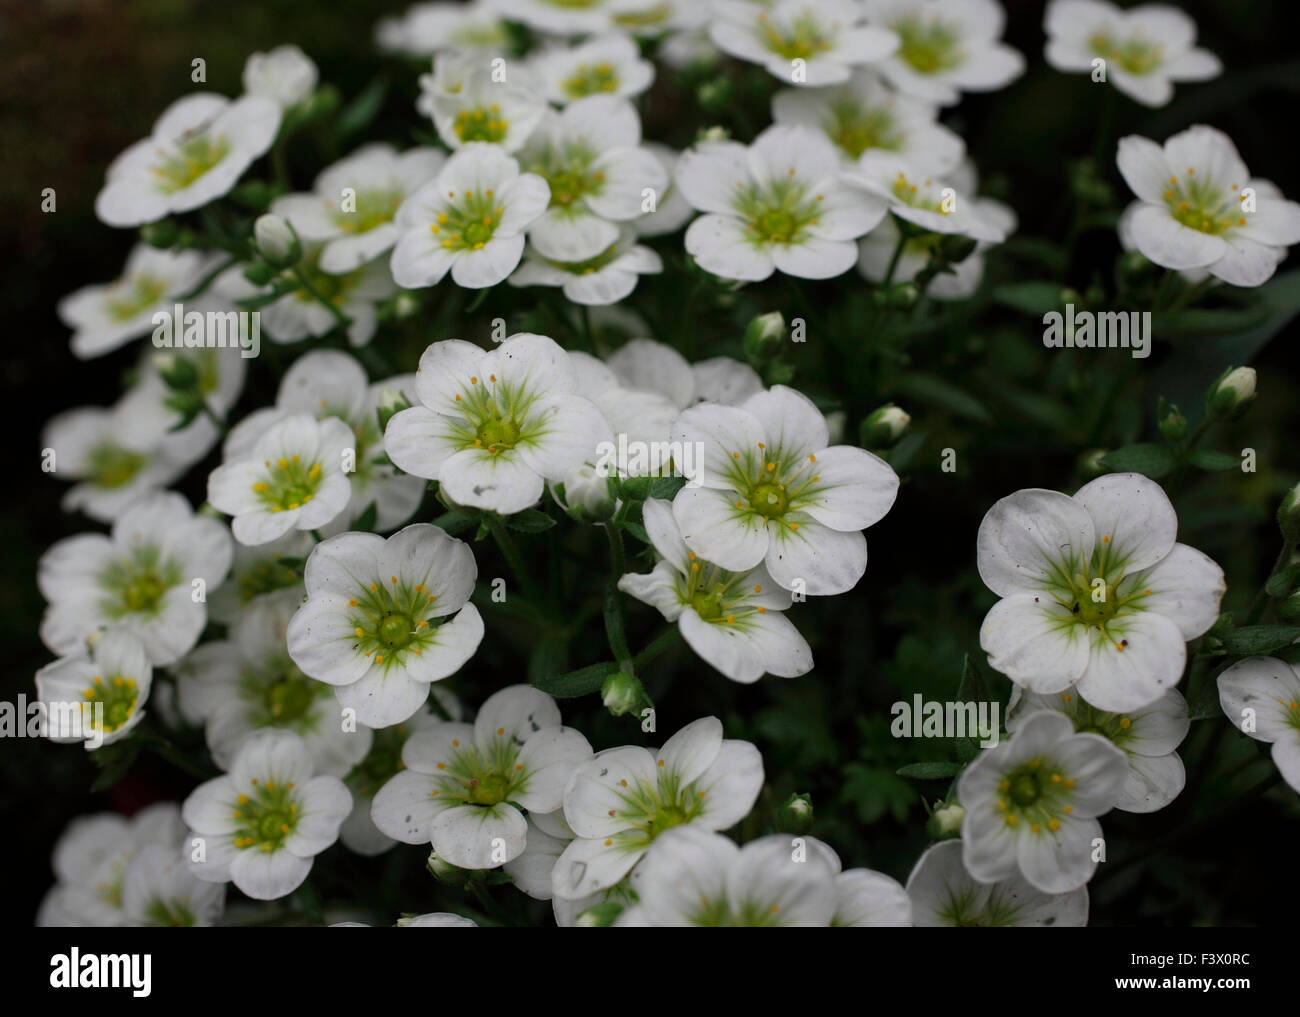 Saxifraga arendisii 'White Carpet' close up of flowers Stock Photo